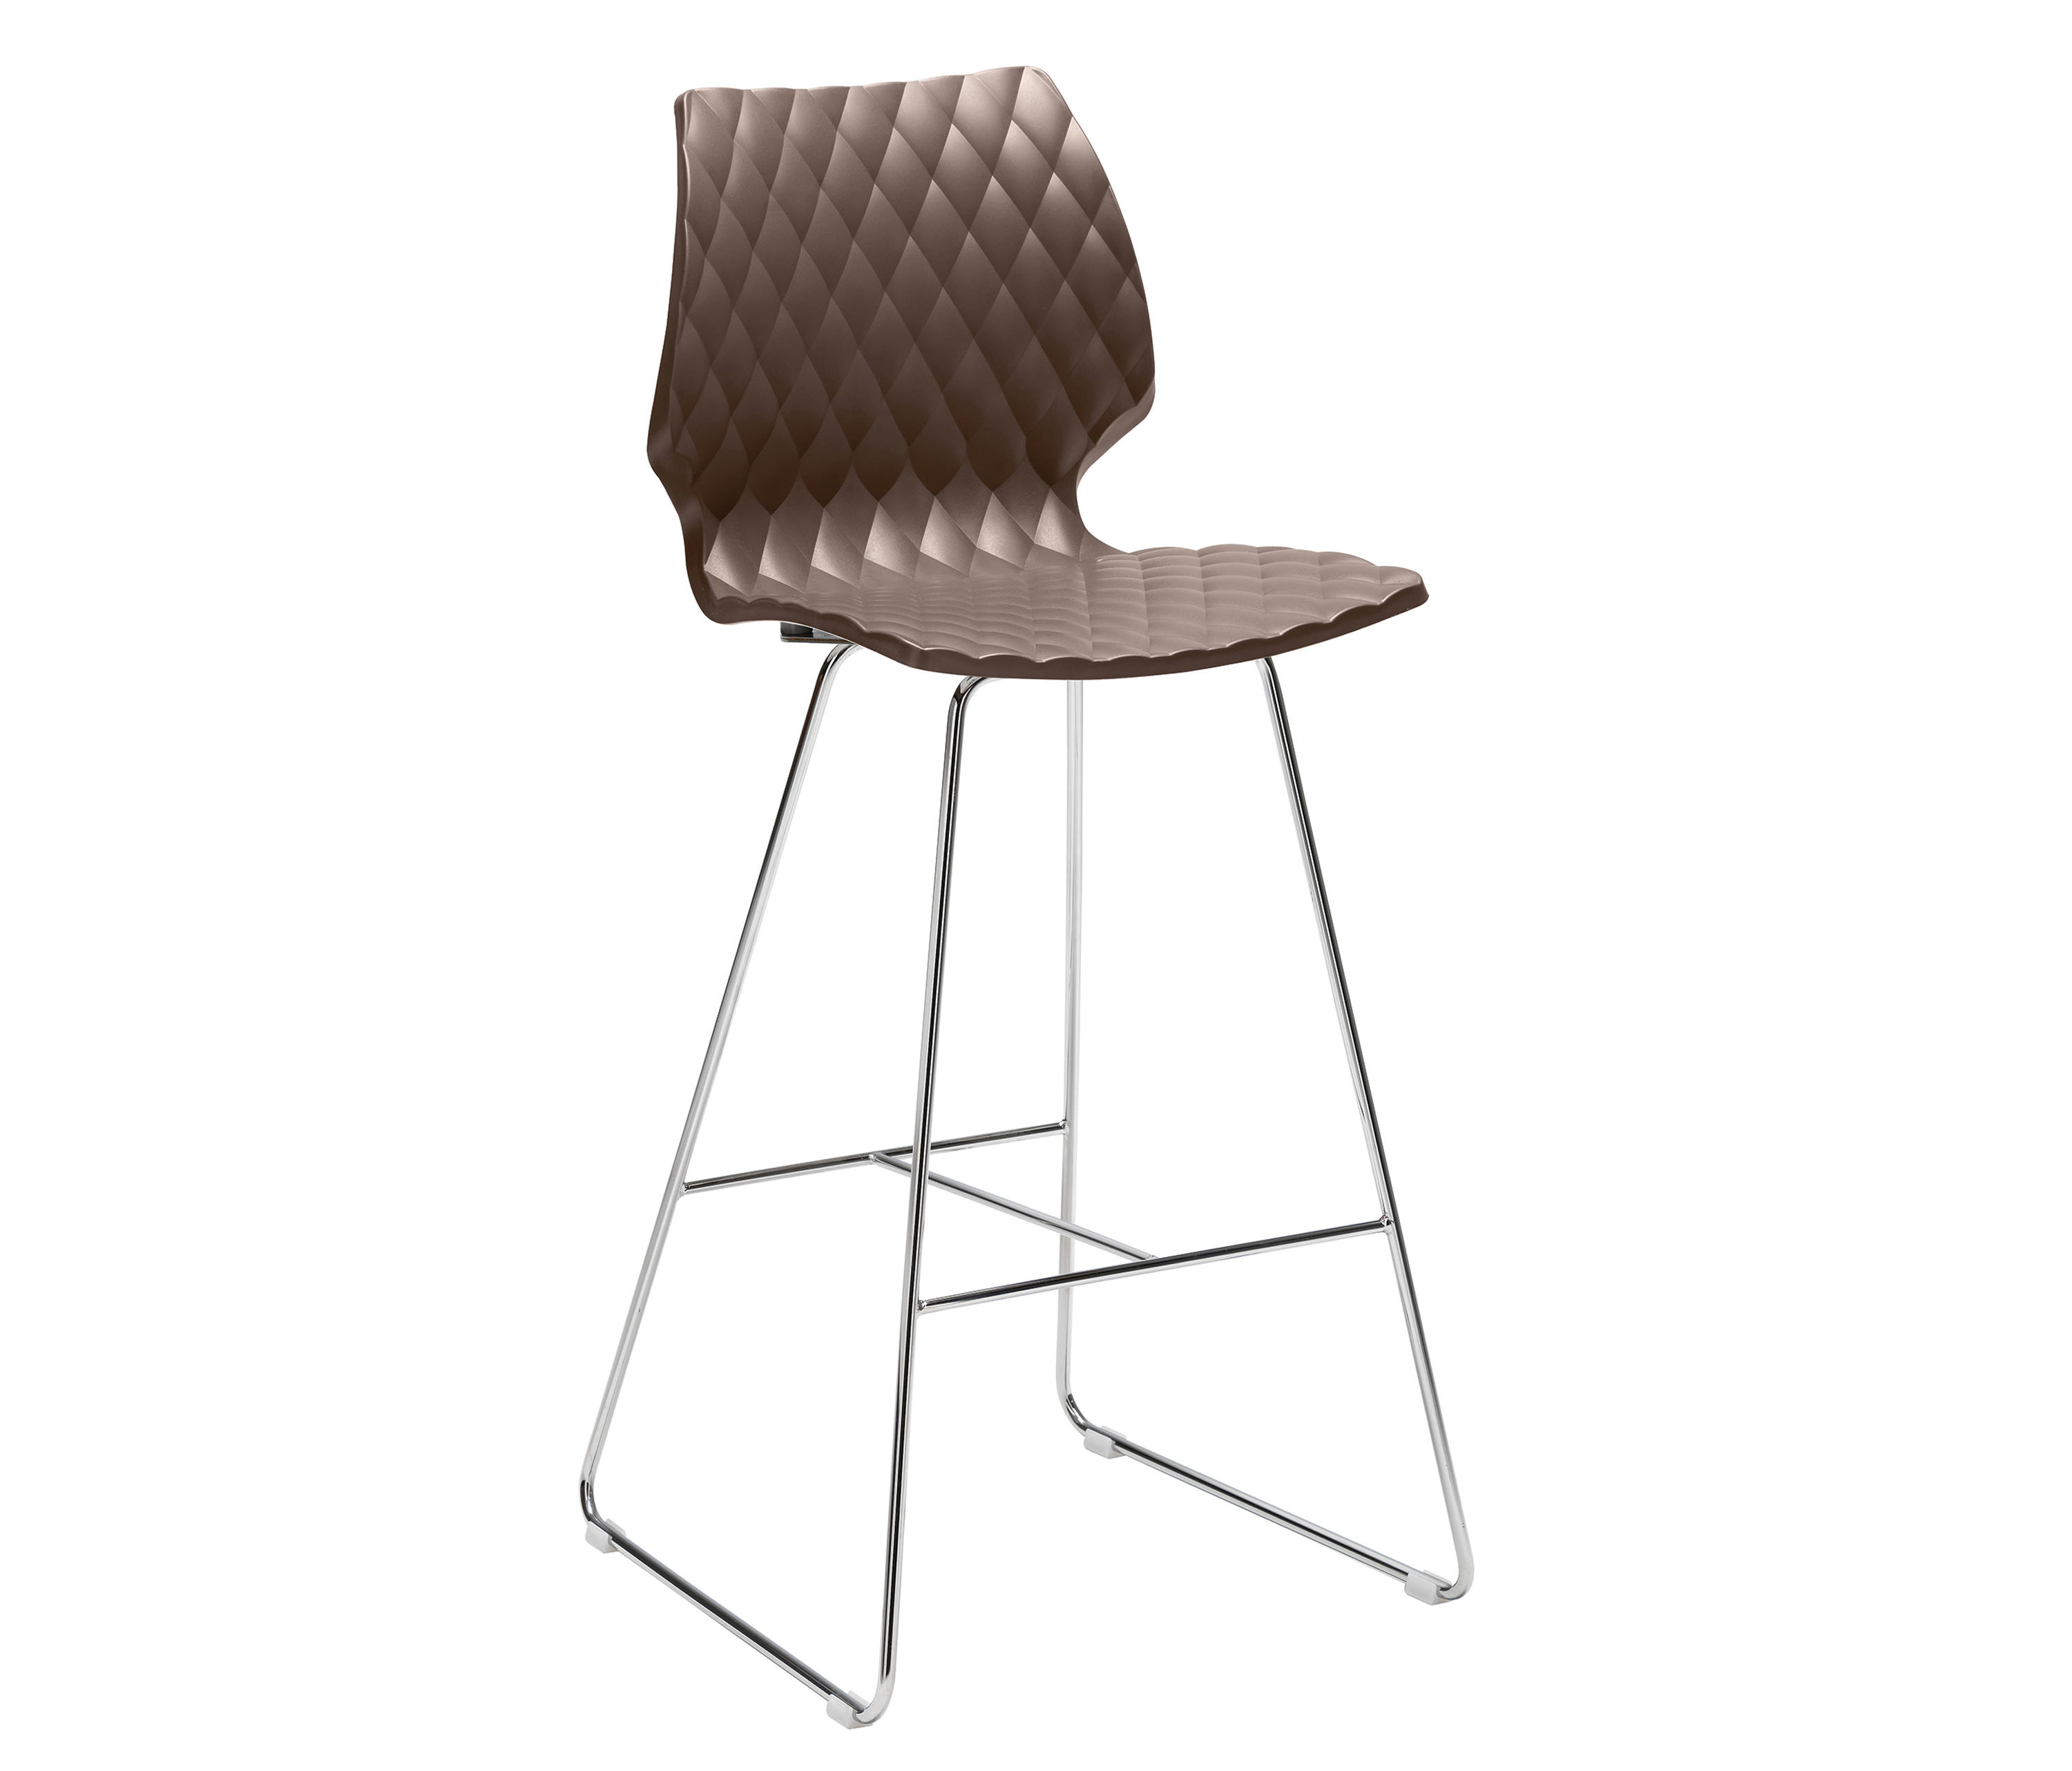 UNI 391 - Bar stools from Et al. | Architonic